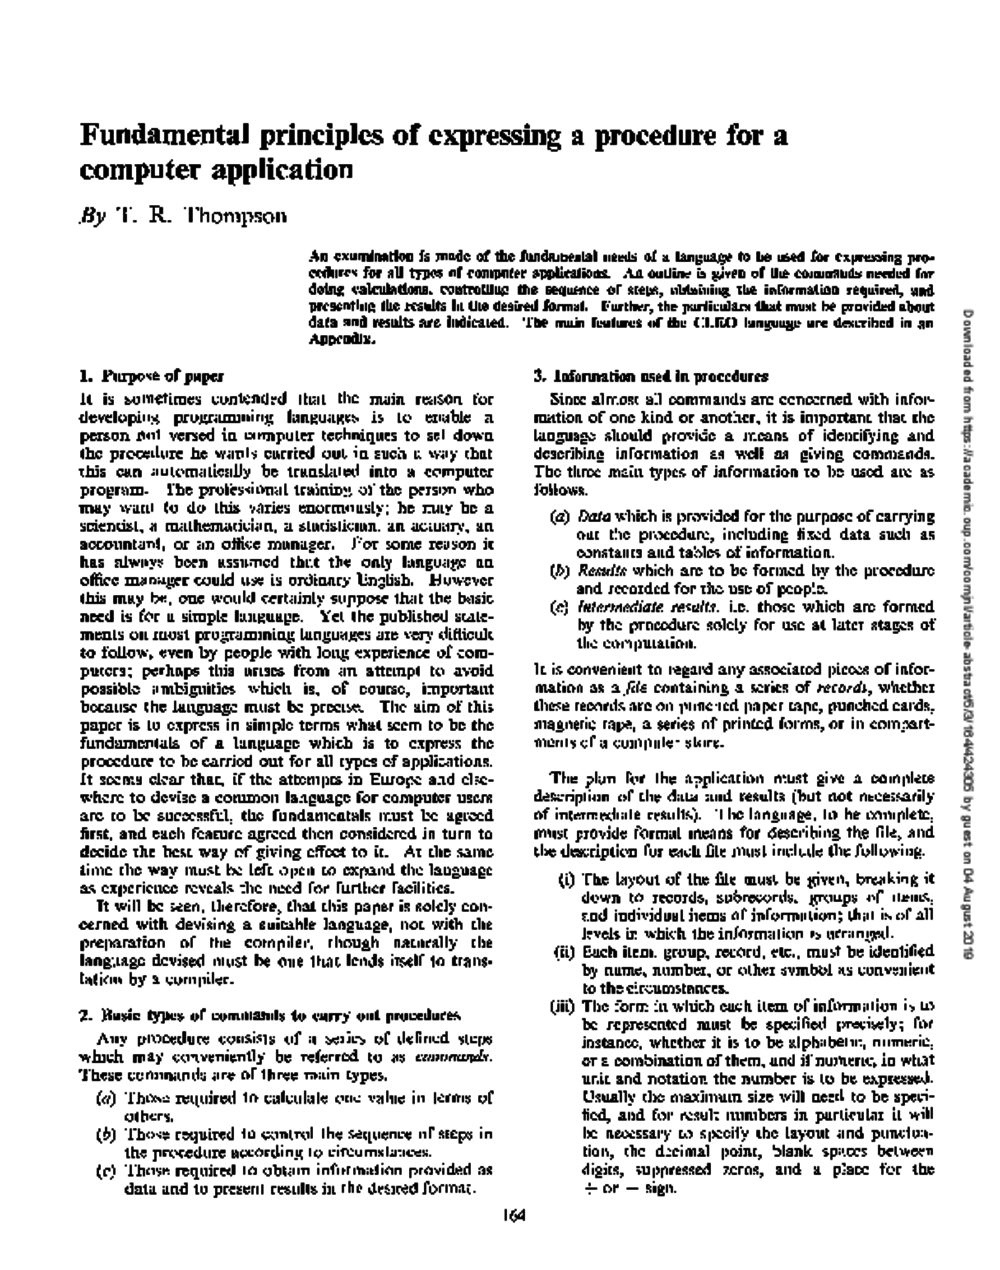 Article: Fundamental Principles of Expressing a Procedure for a Computer Application